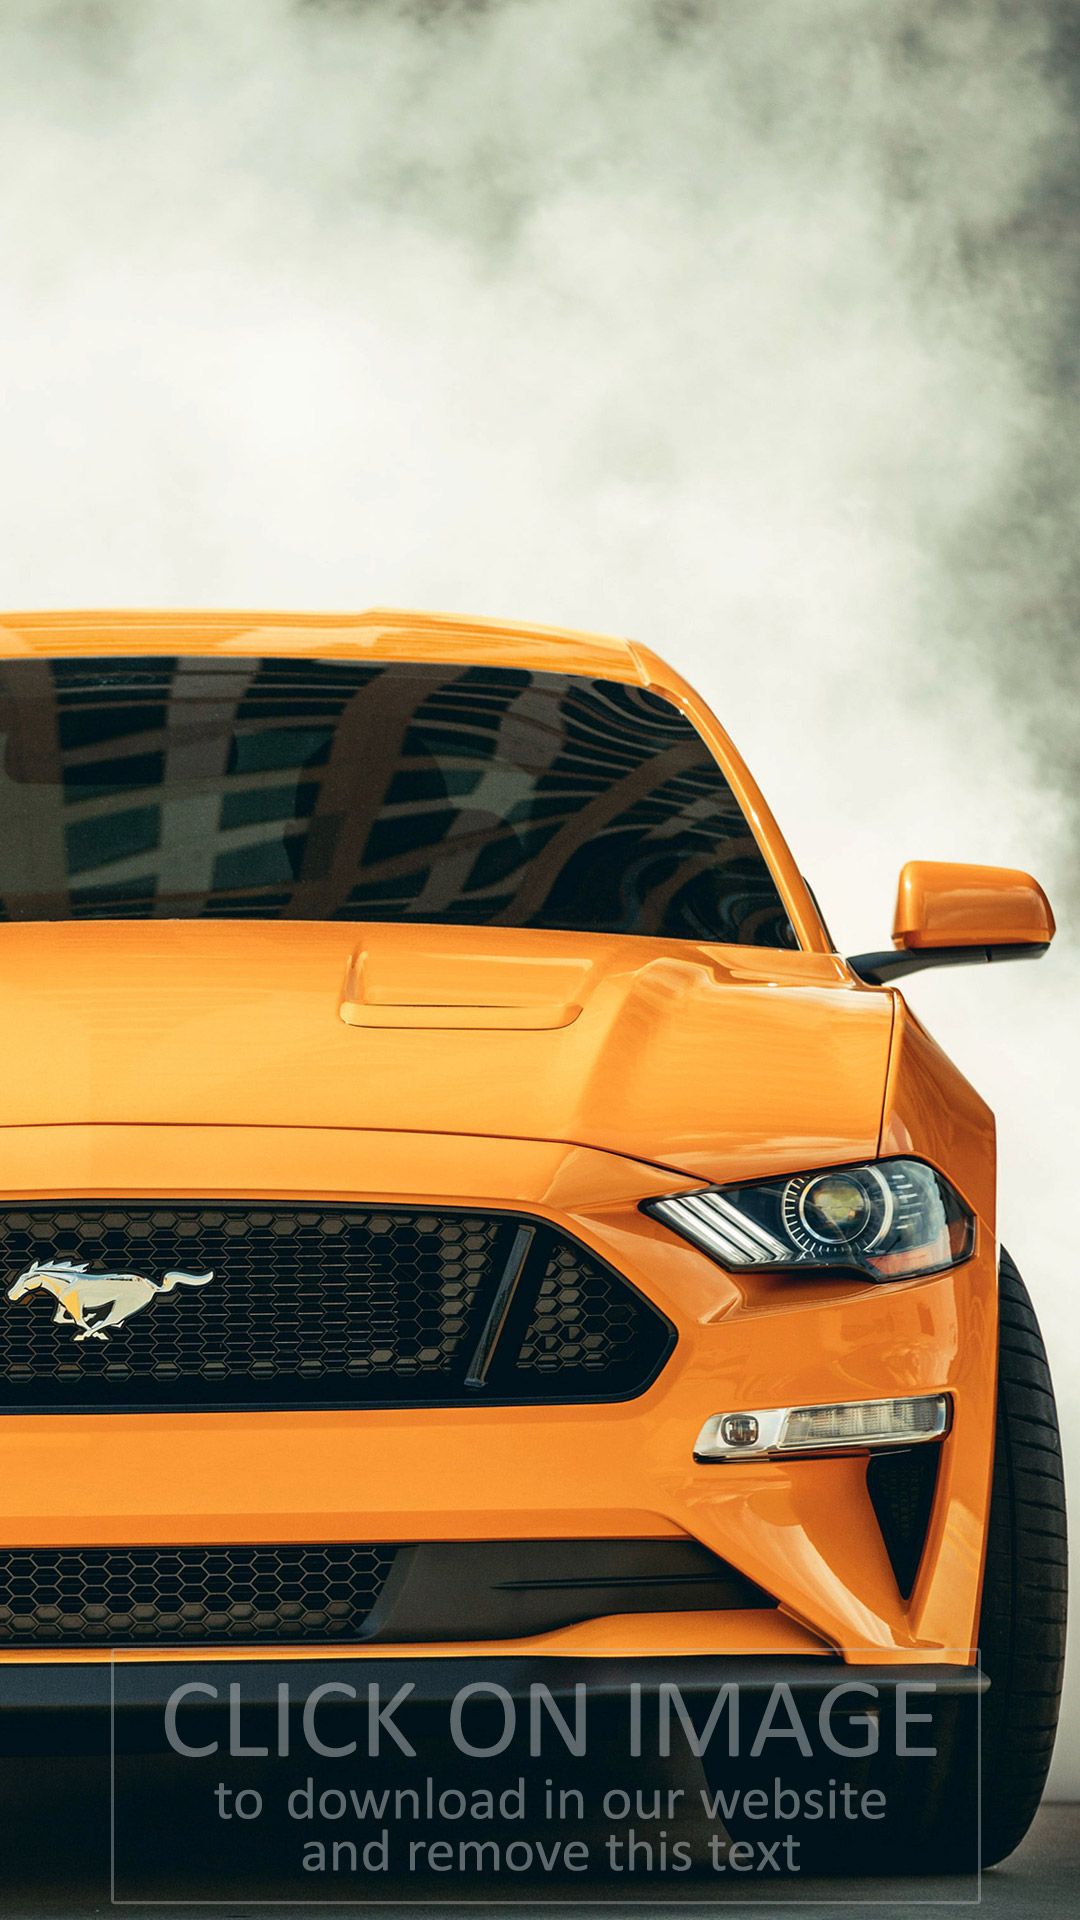 2018 Ford Mustang 3018 - HD Wallpaper 